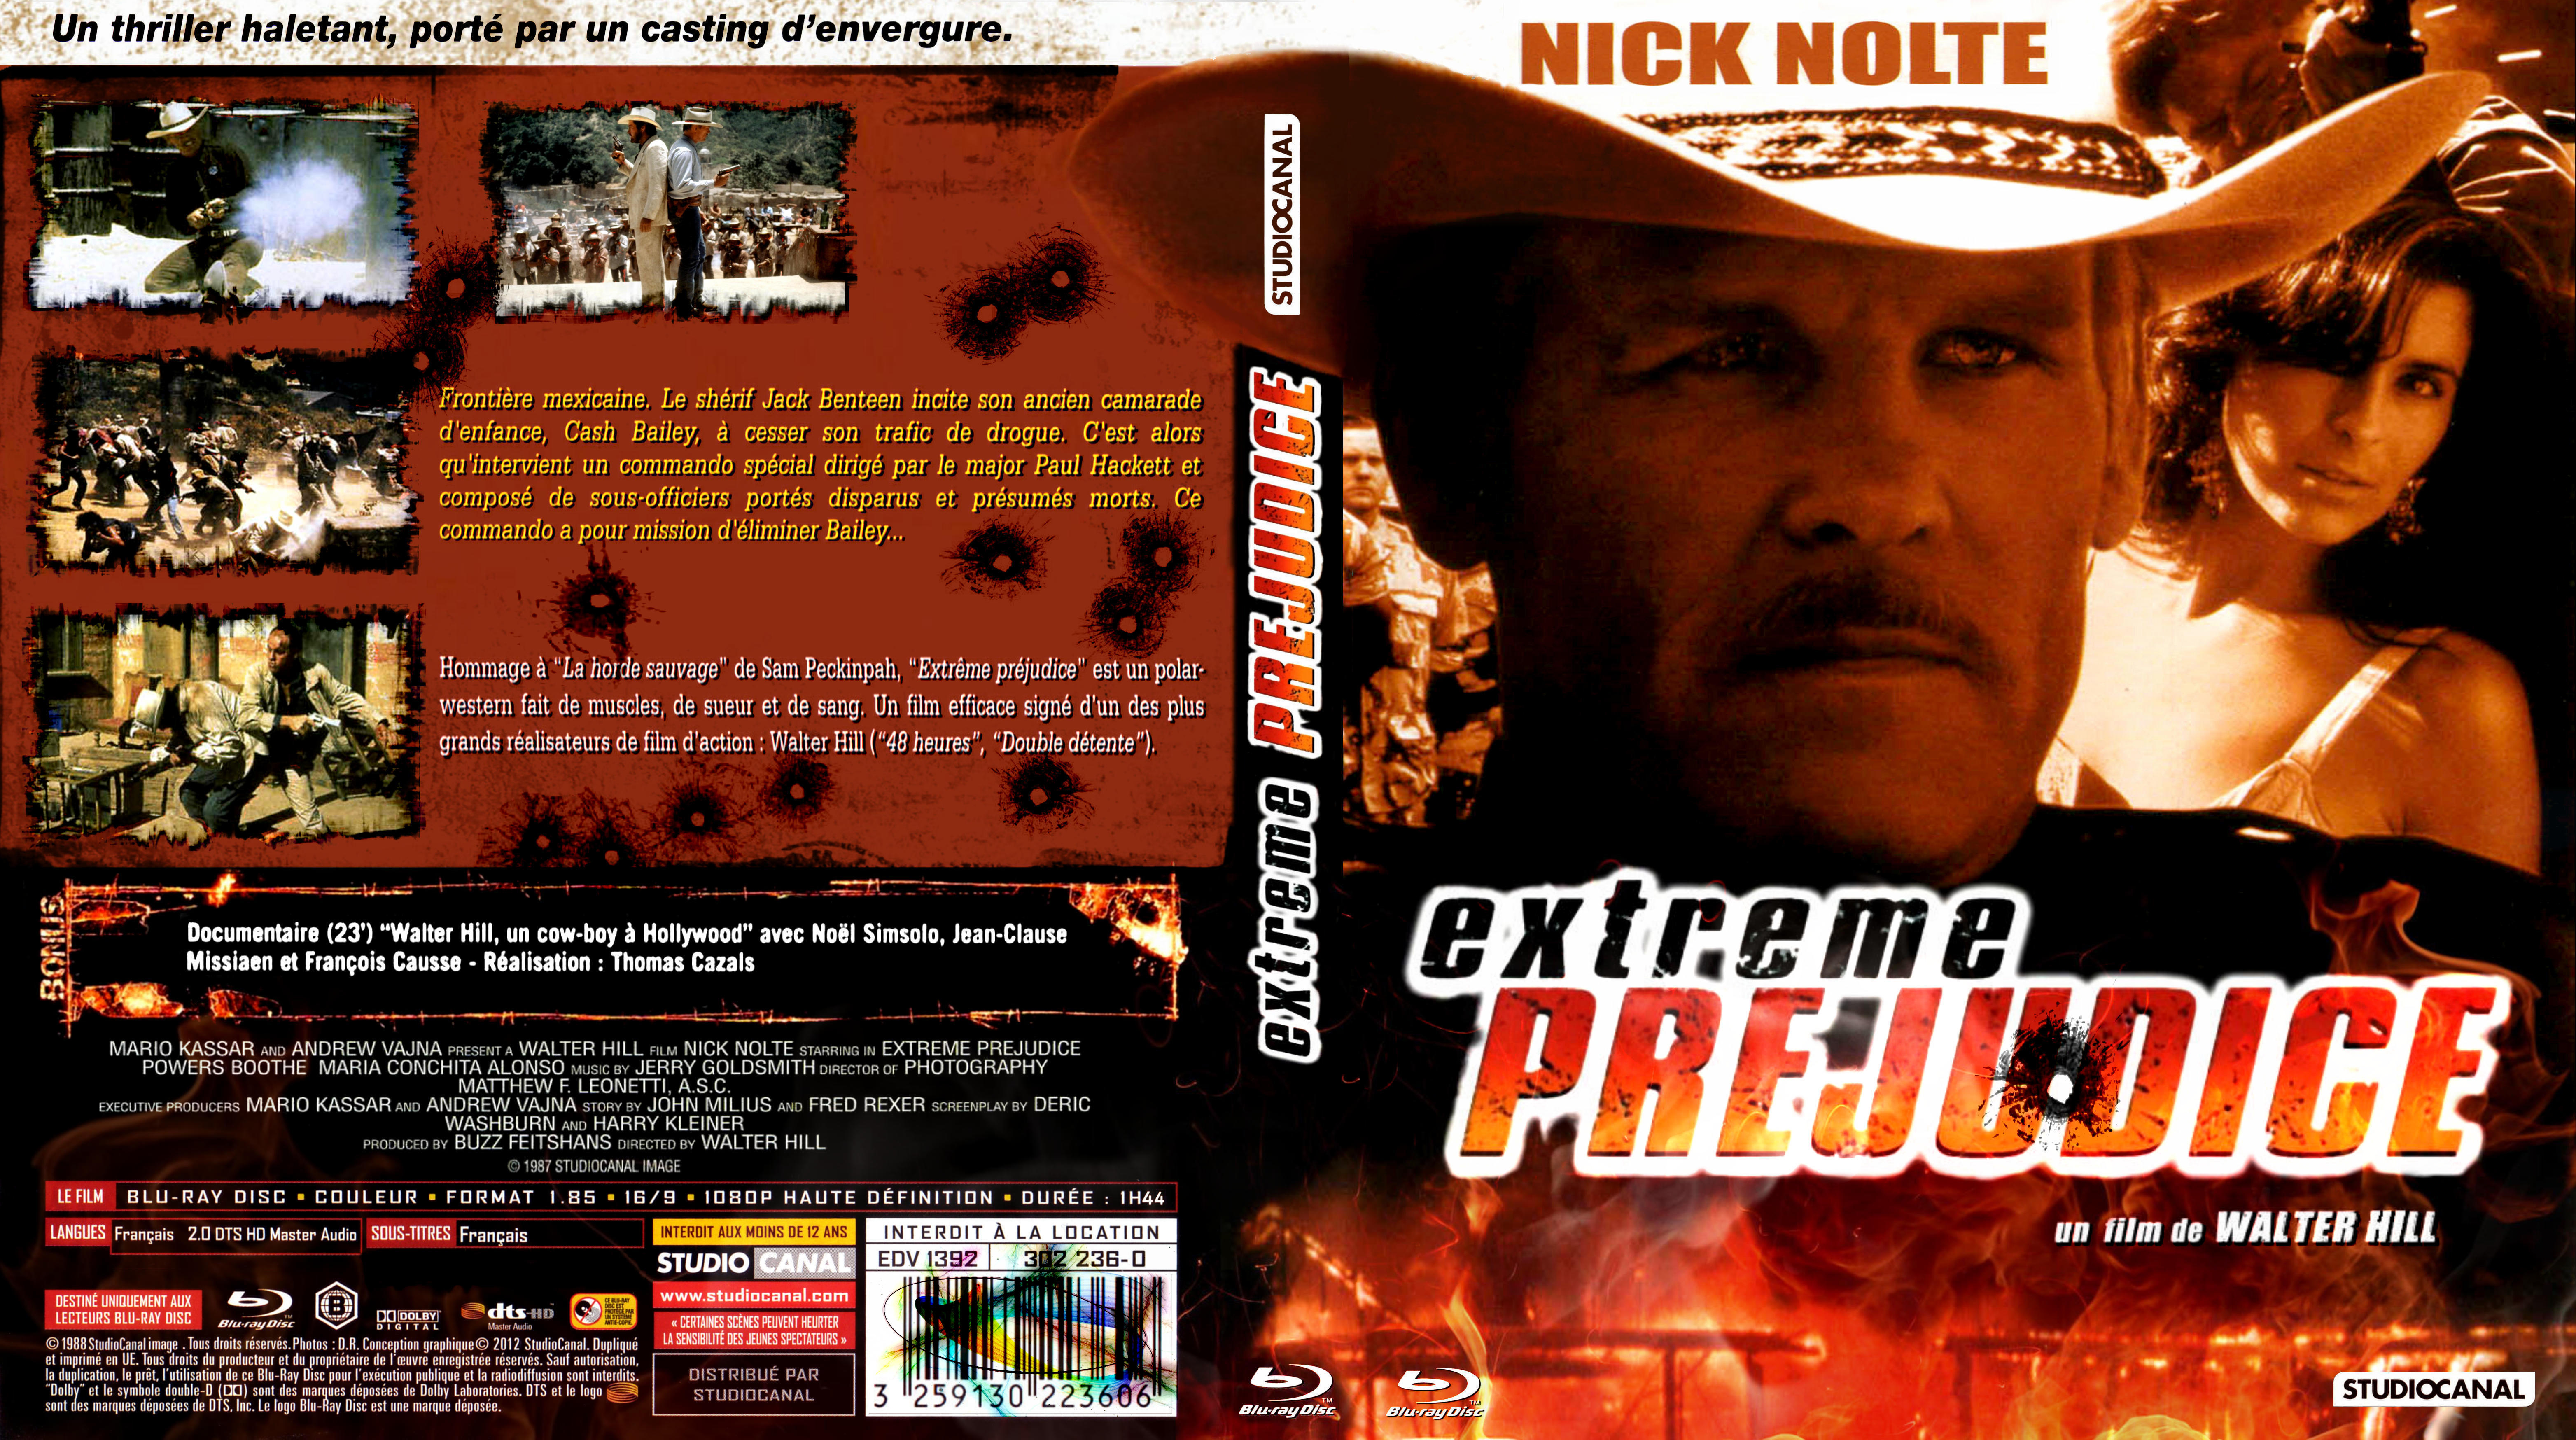 Jaquette DVD Extrme prjudice custom (BLU-RAY)